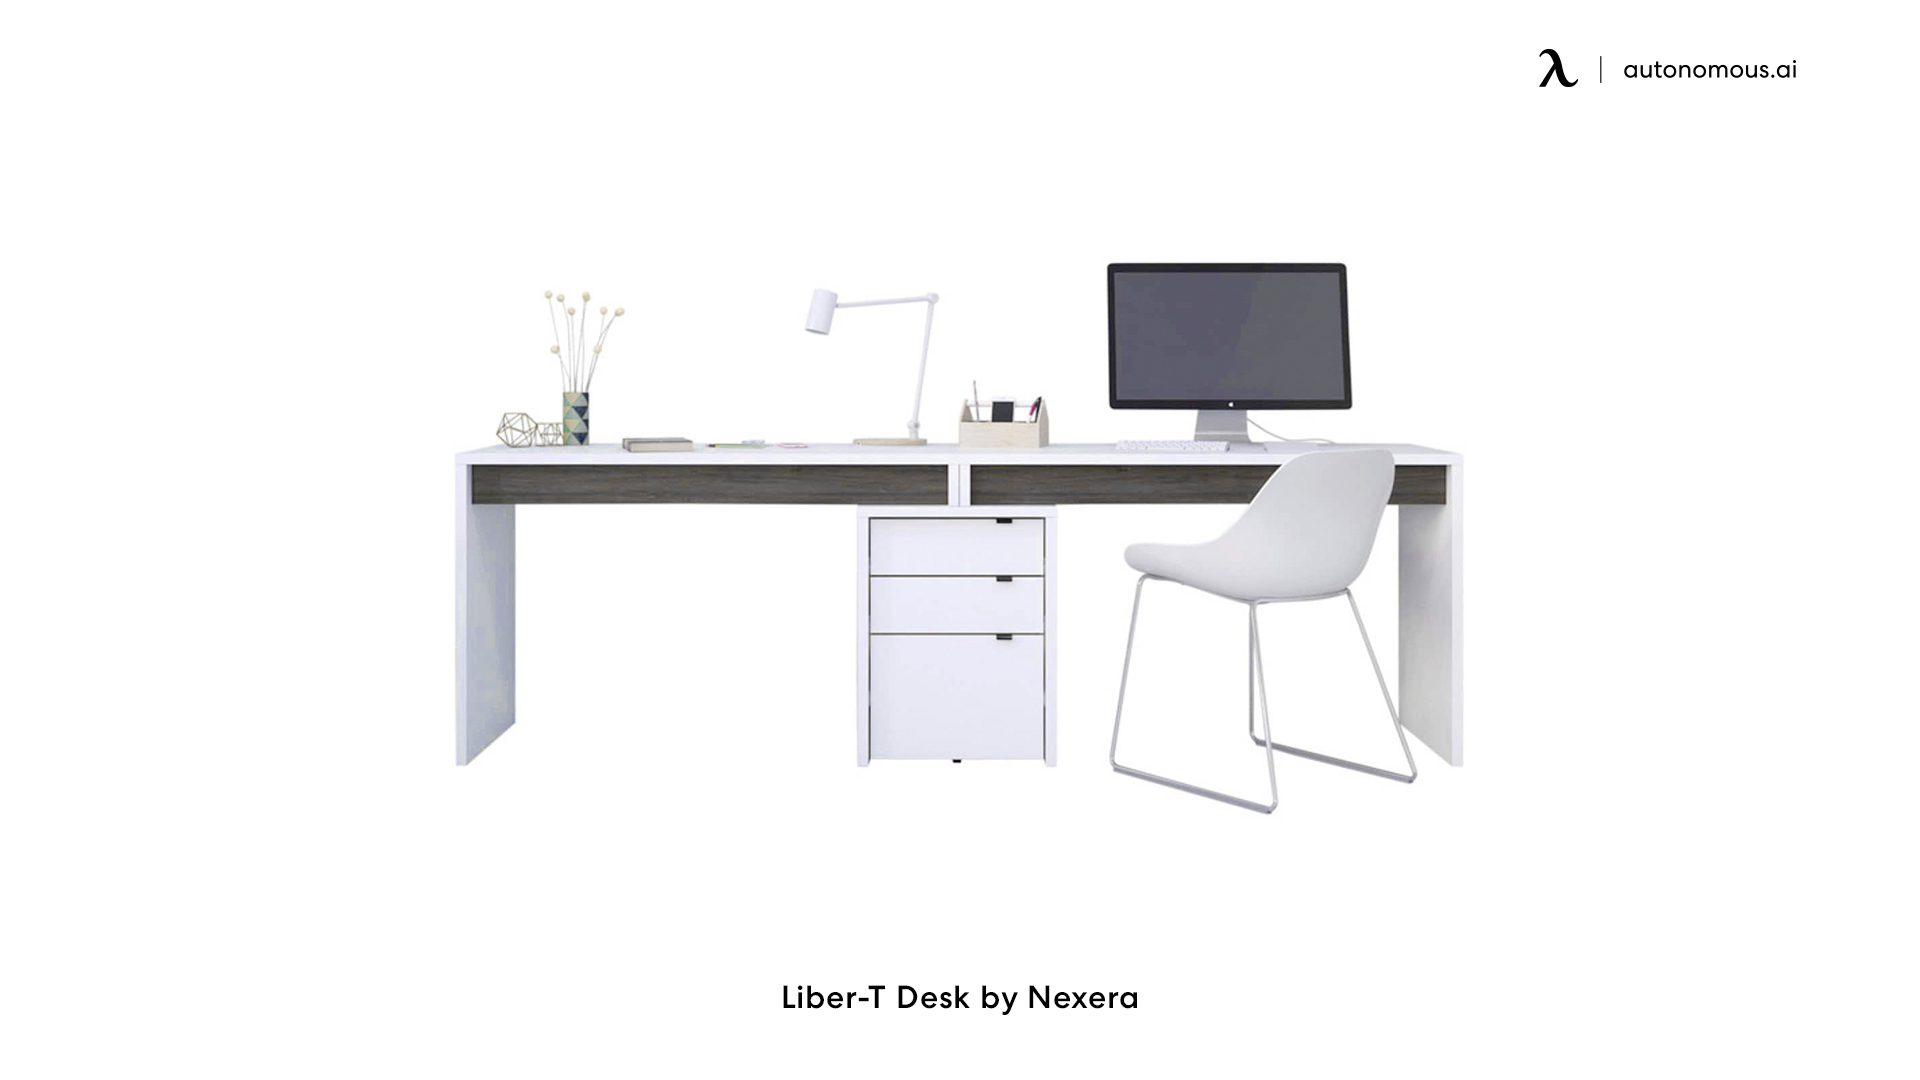 Liber-T Desk by Nexera